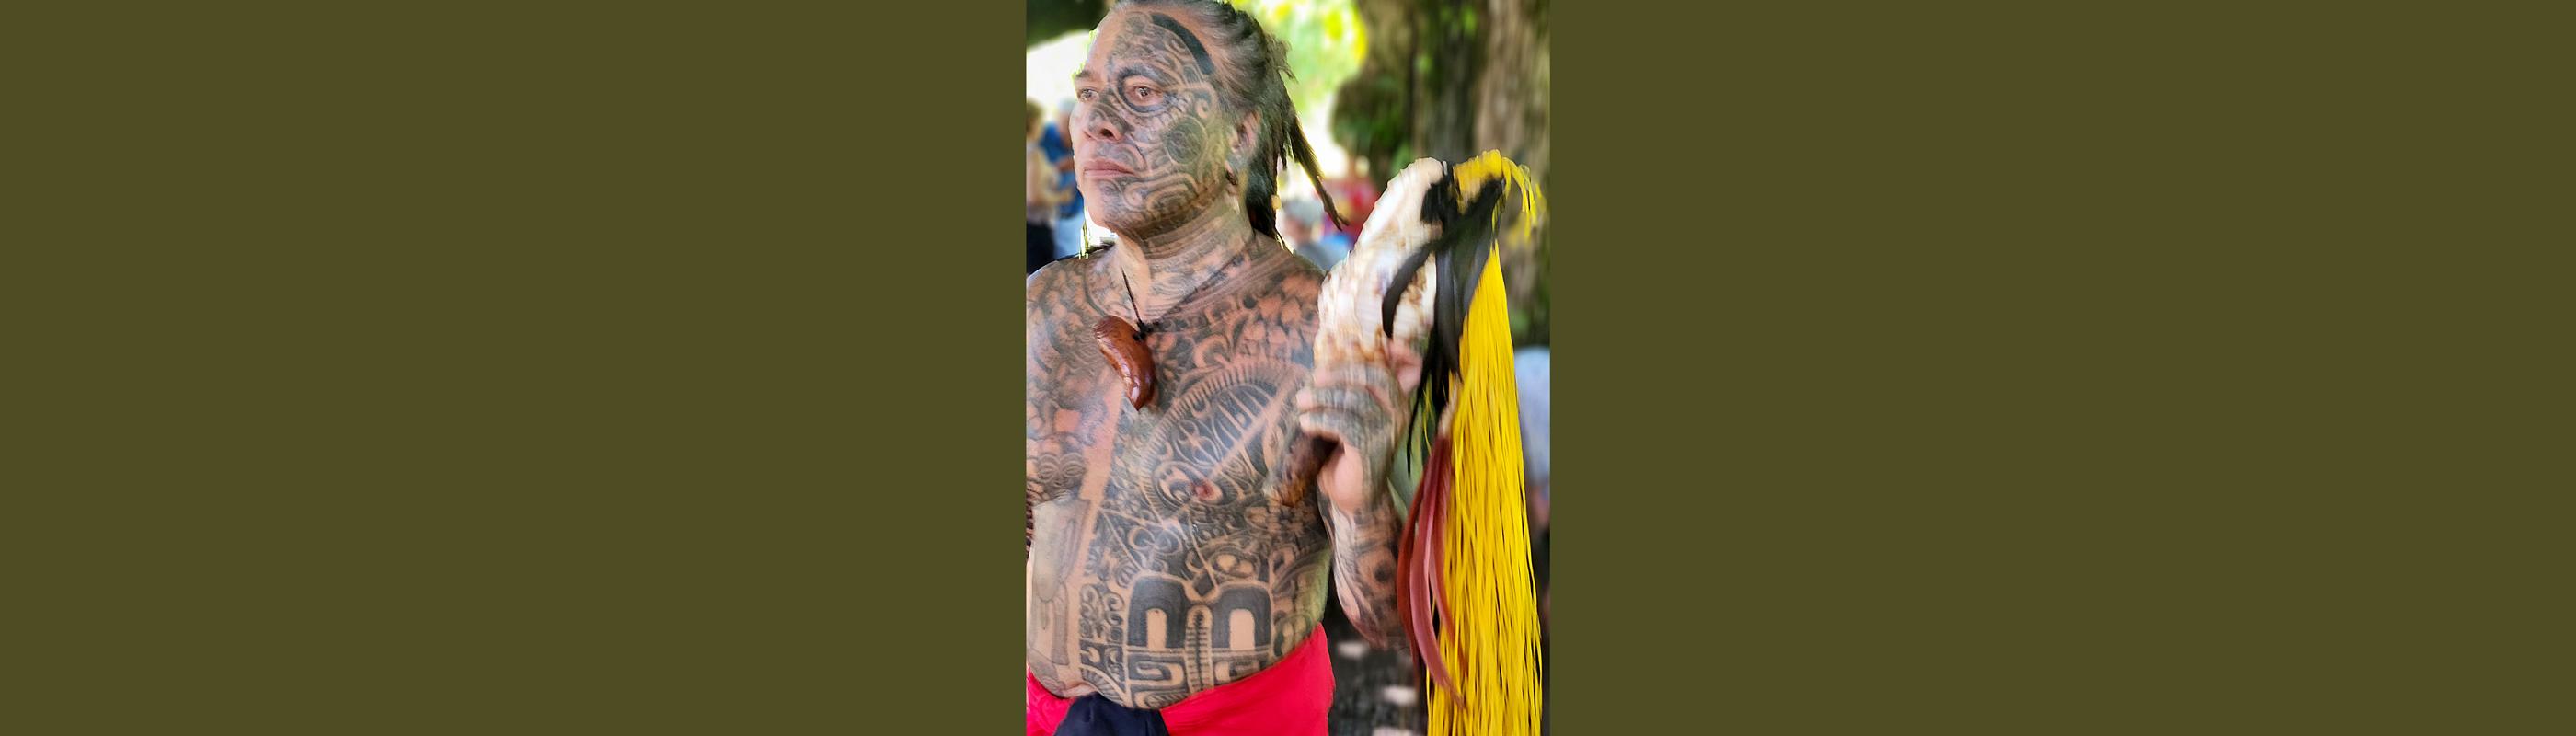 Tattooed Polynesian man